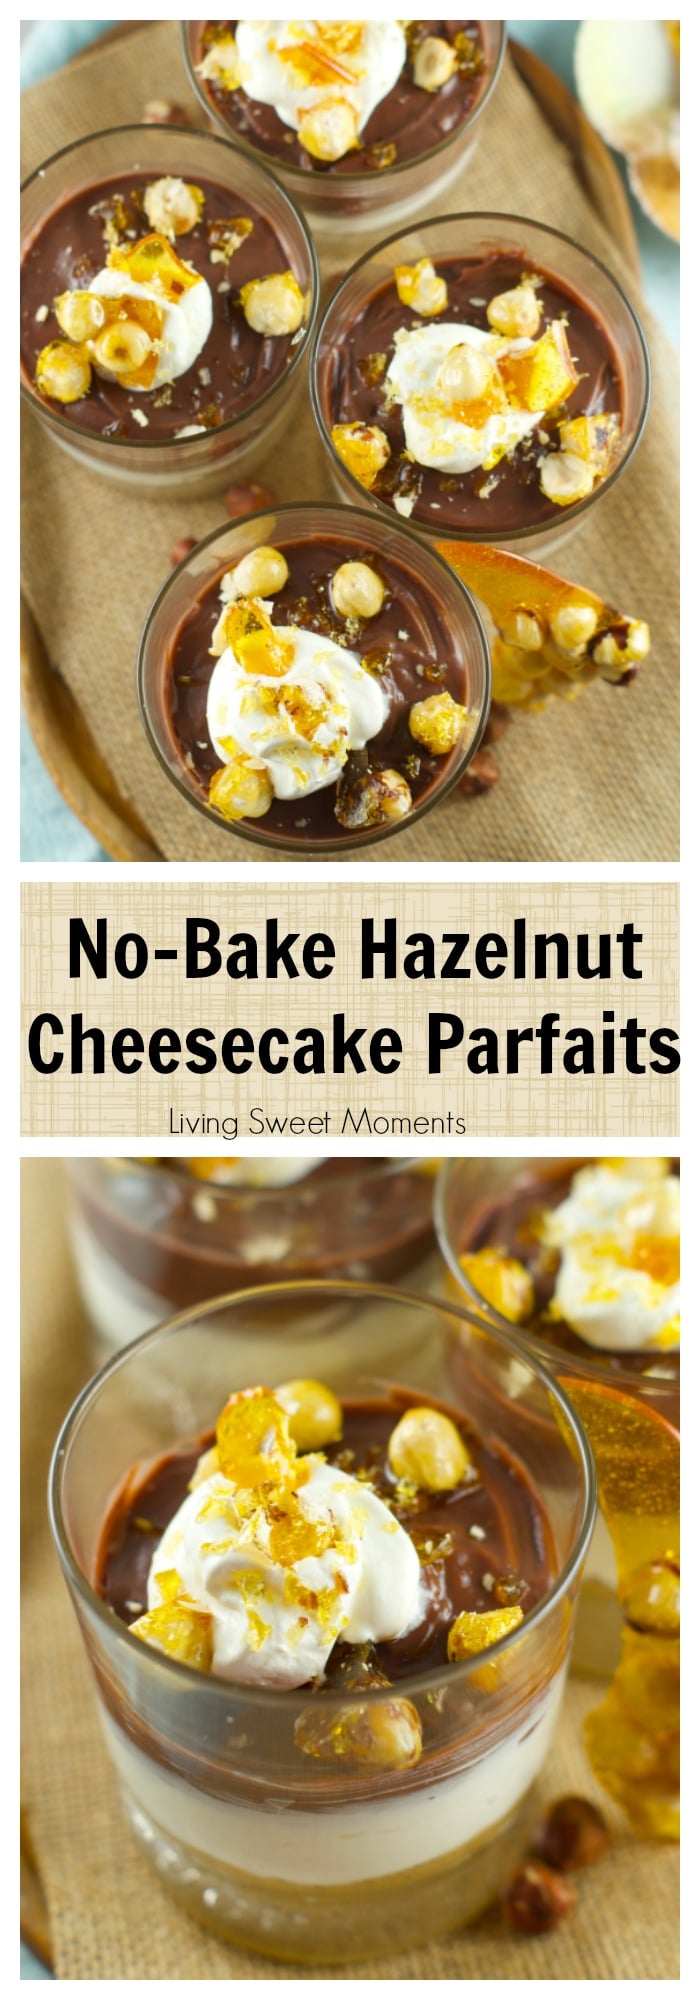 No Bake Hazelnut Cheesecake Parfaits With Candied Hazelnuts – delicious cheesecake parfaits with chocolate pudding. The perfect no bake summer dessert.